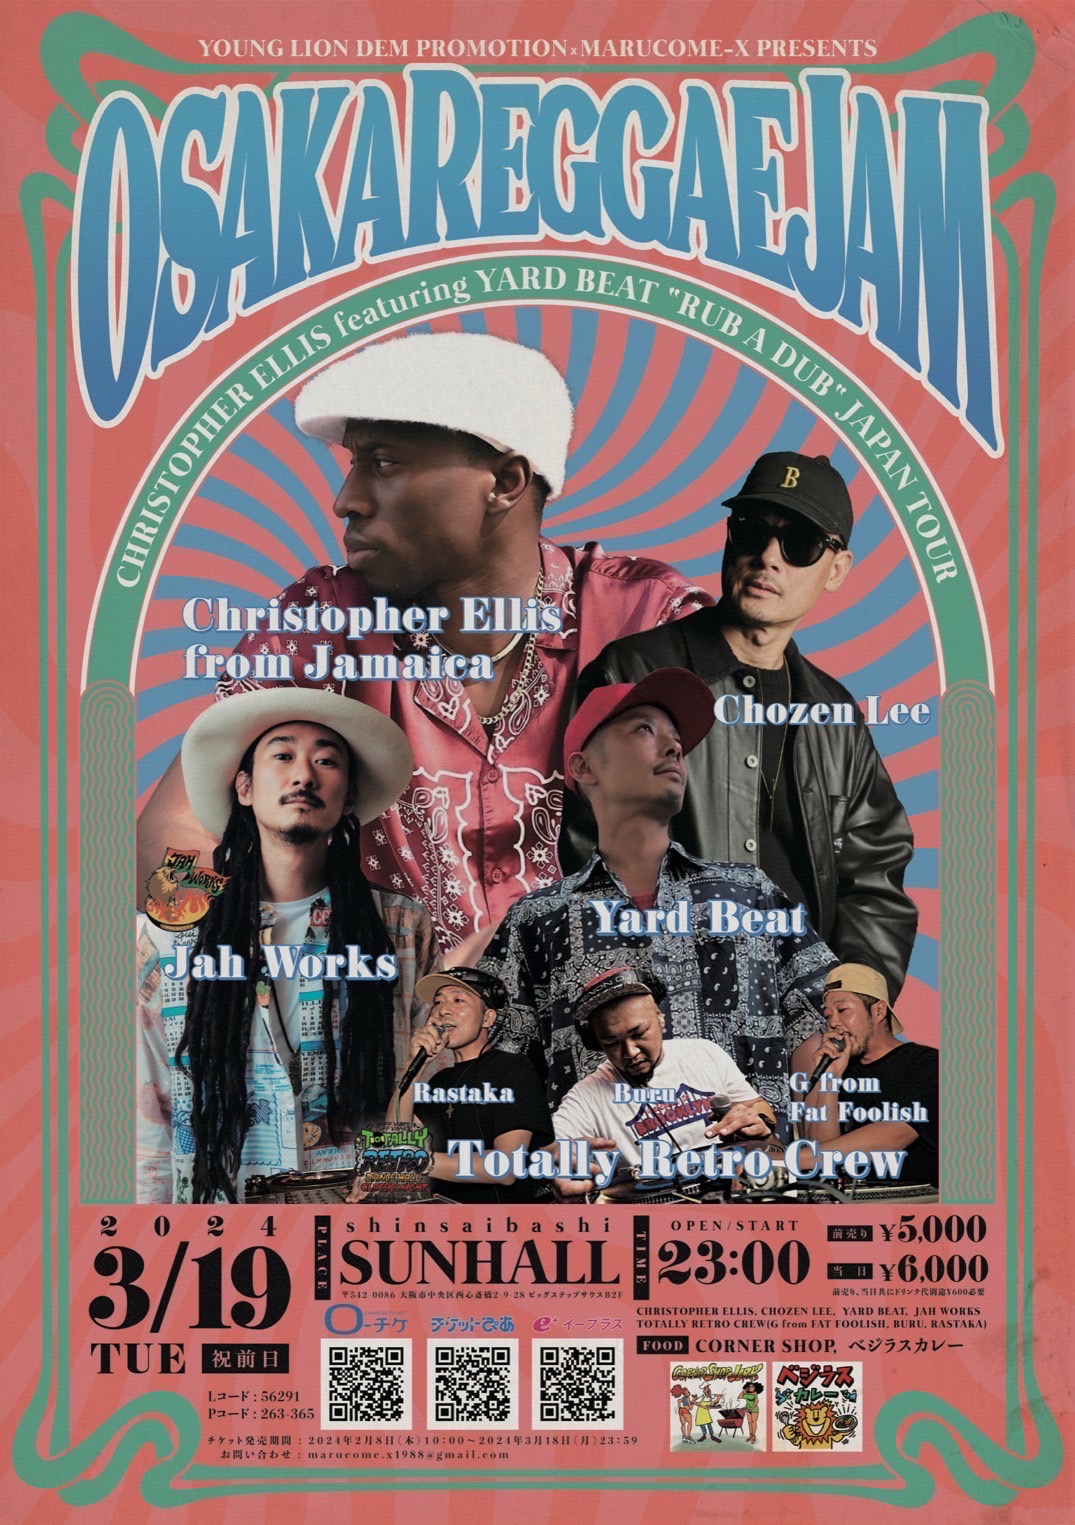 OSAKA REGGAE JAM  〜Christopher Ellis featuring Yard Beat  “Rub A Dub“ Japan tour〜